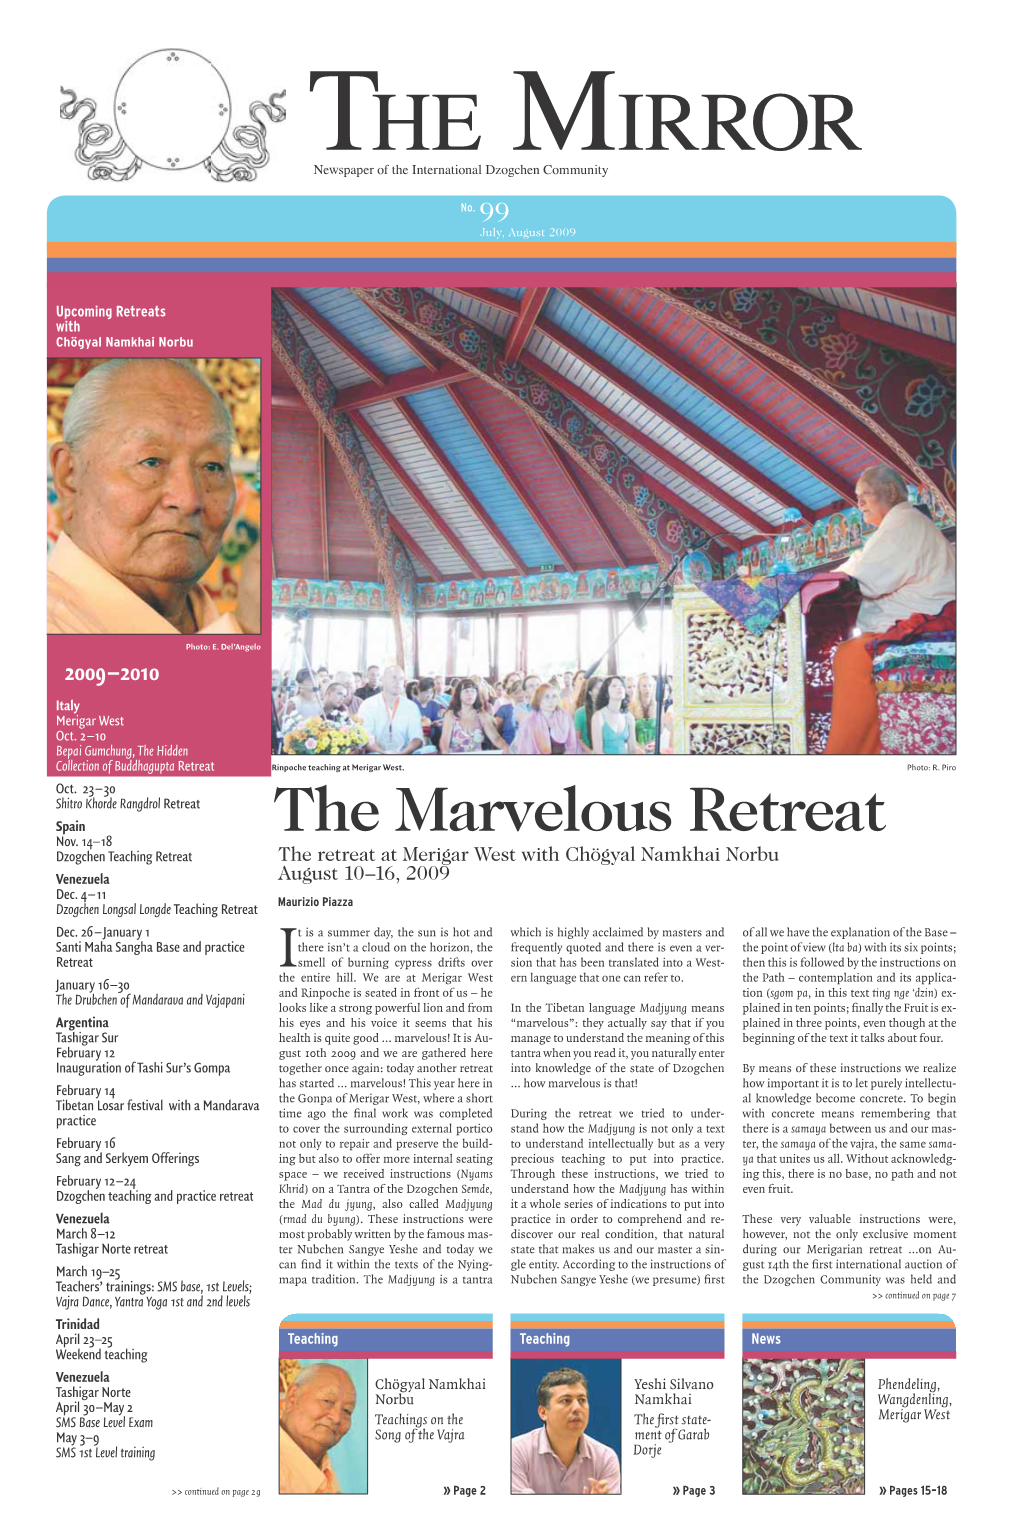 The Marvelous Retreat Nov